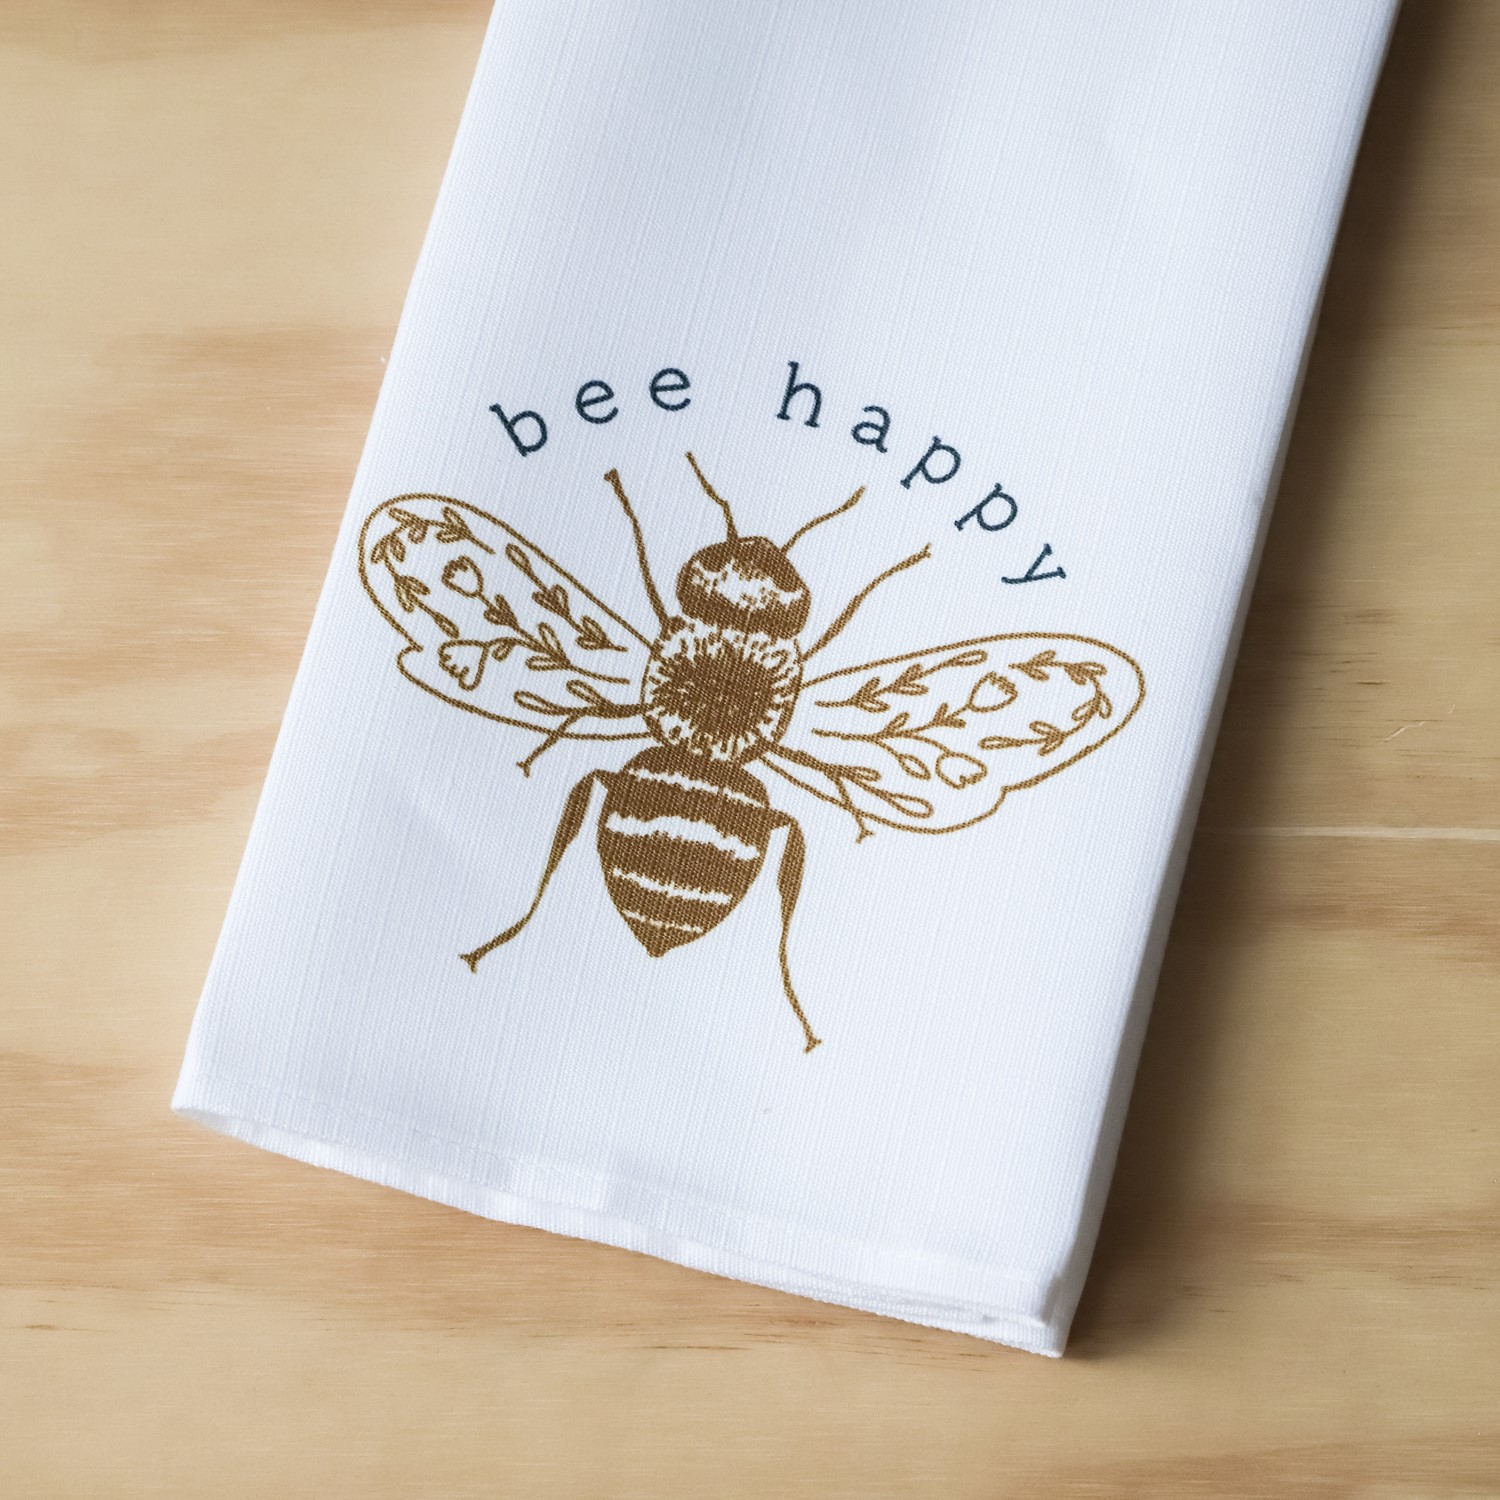 Bee-utiful Bees Dish Towel 